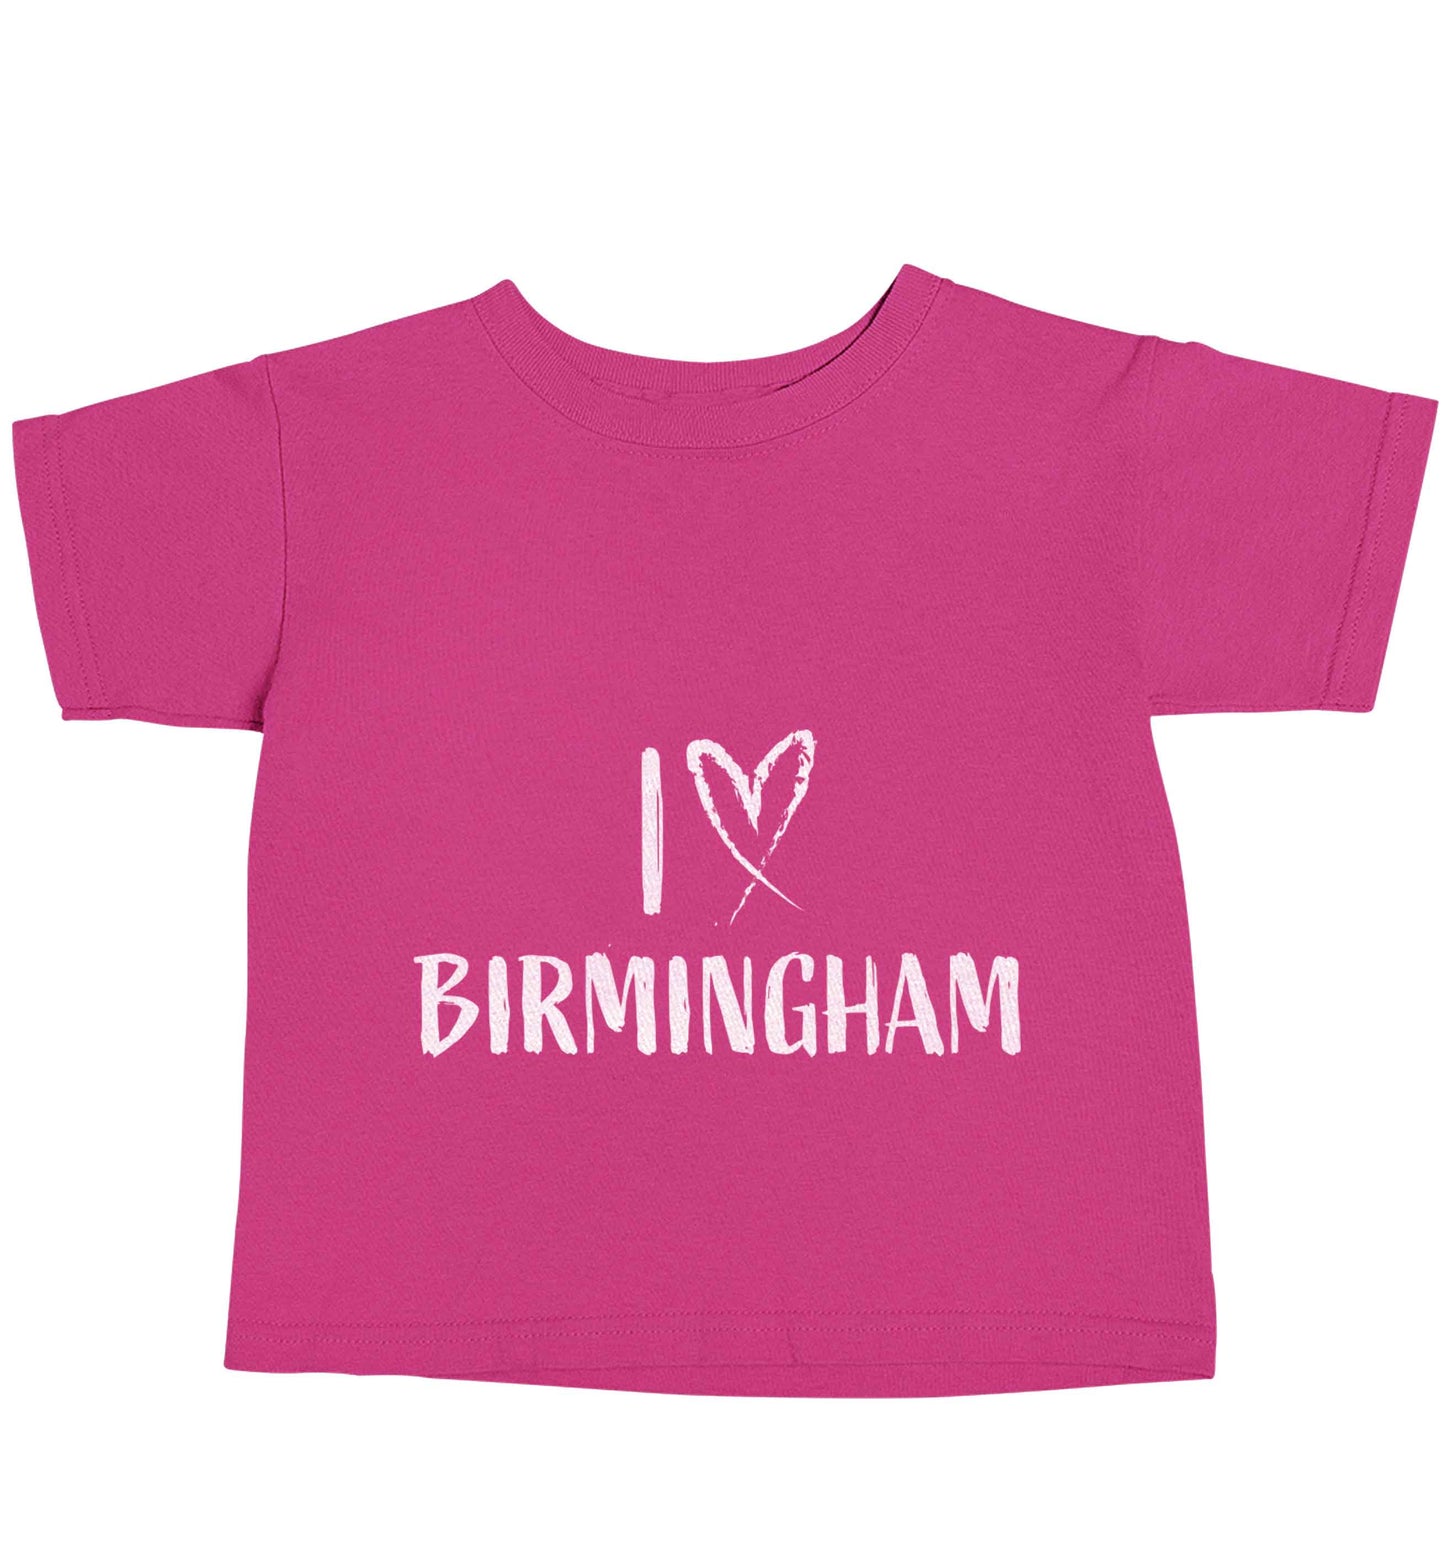 I love Birmingham pink baby toddler Tshirt 2 Years